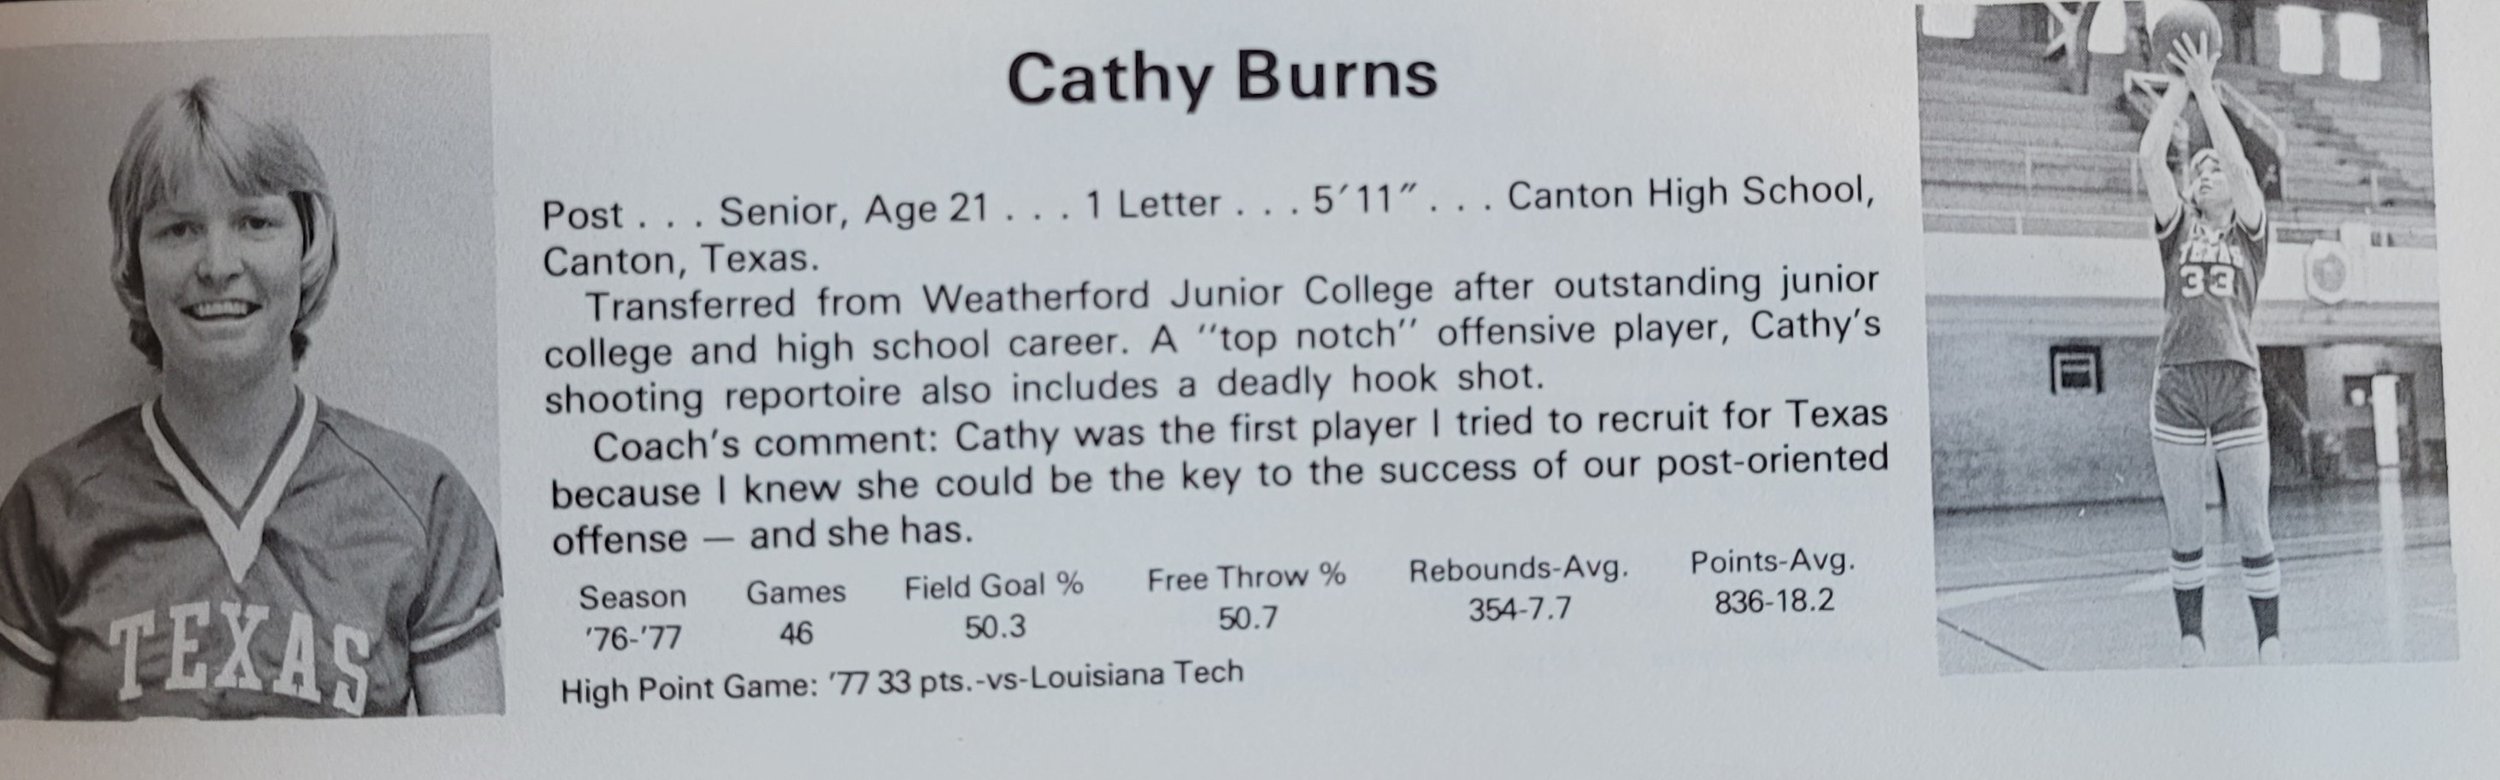 Cathy Burns (Copy)